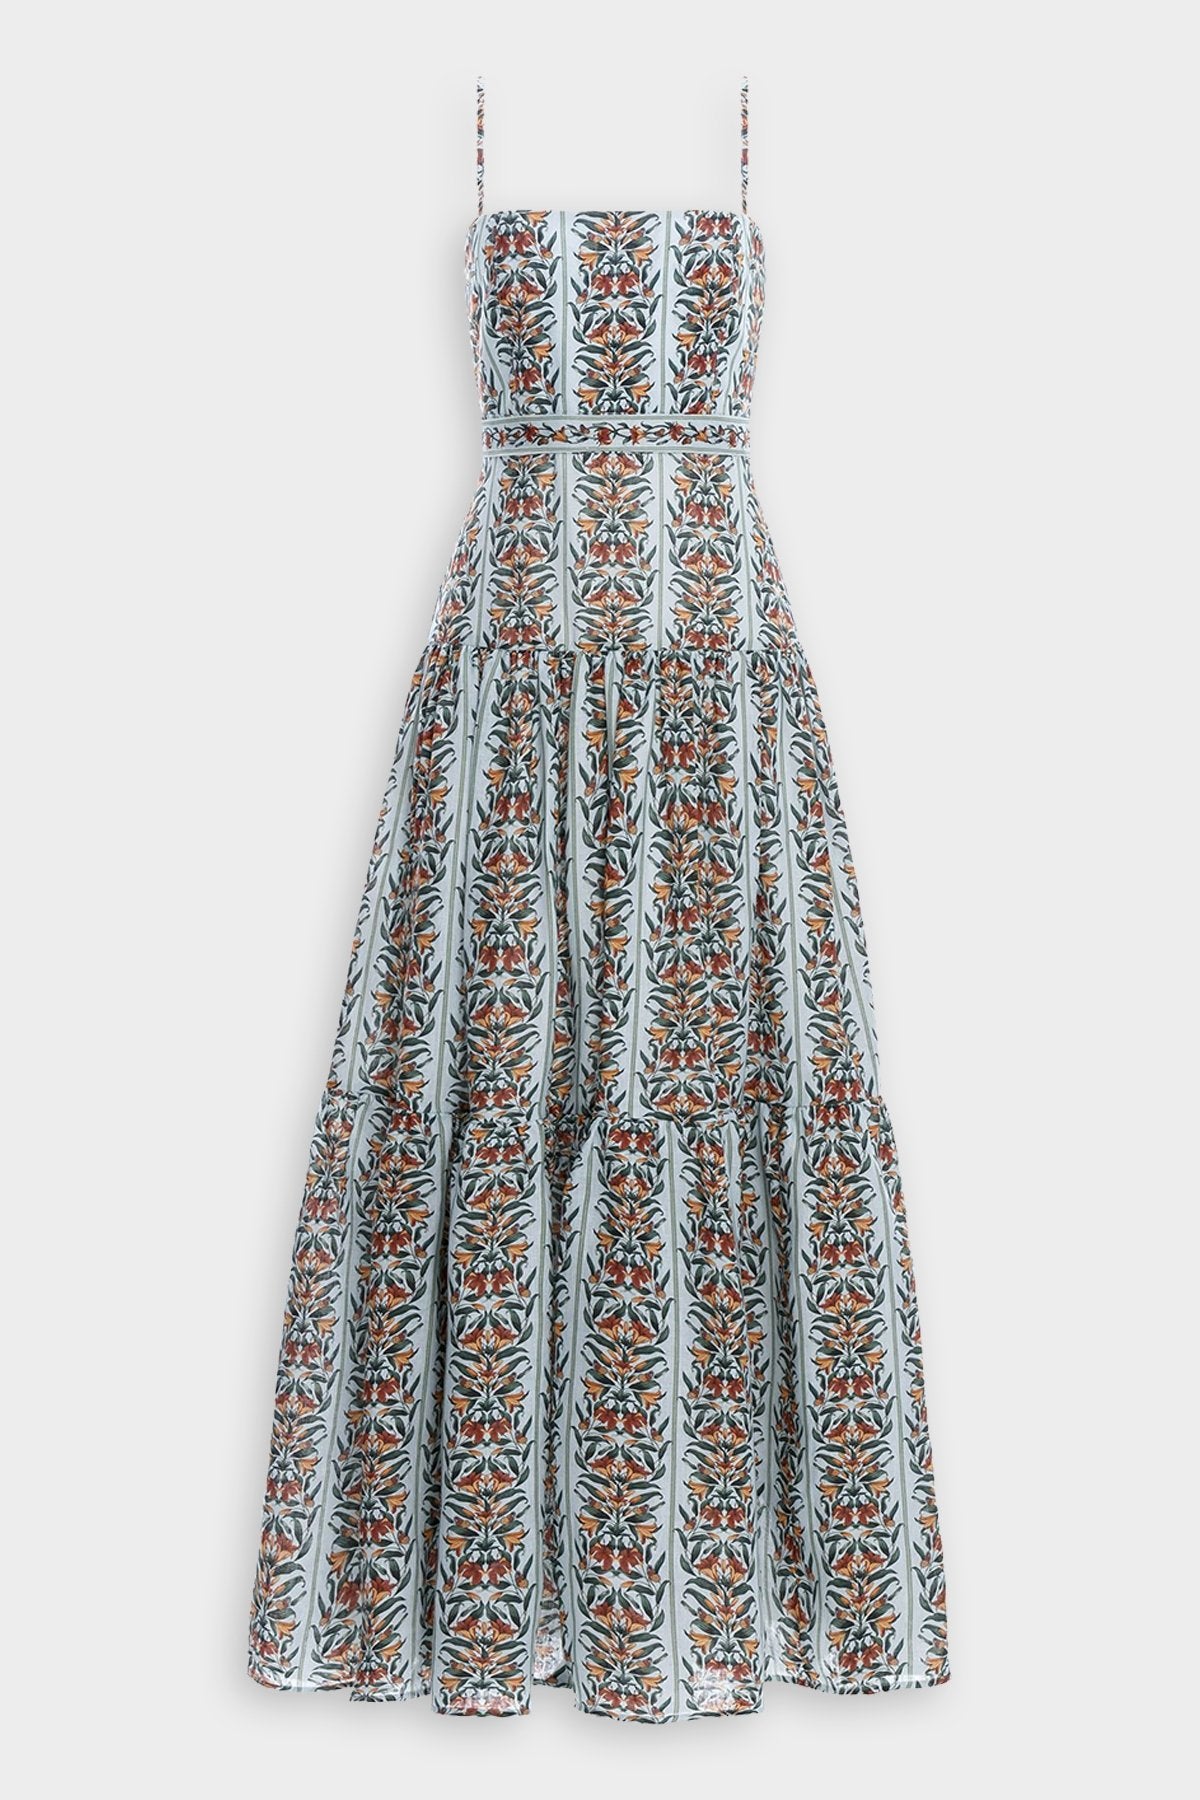 Lima Monarca Maxi Dress in Azul - shop-olivia.com